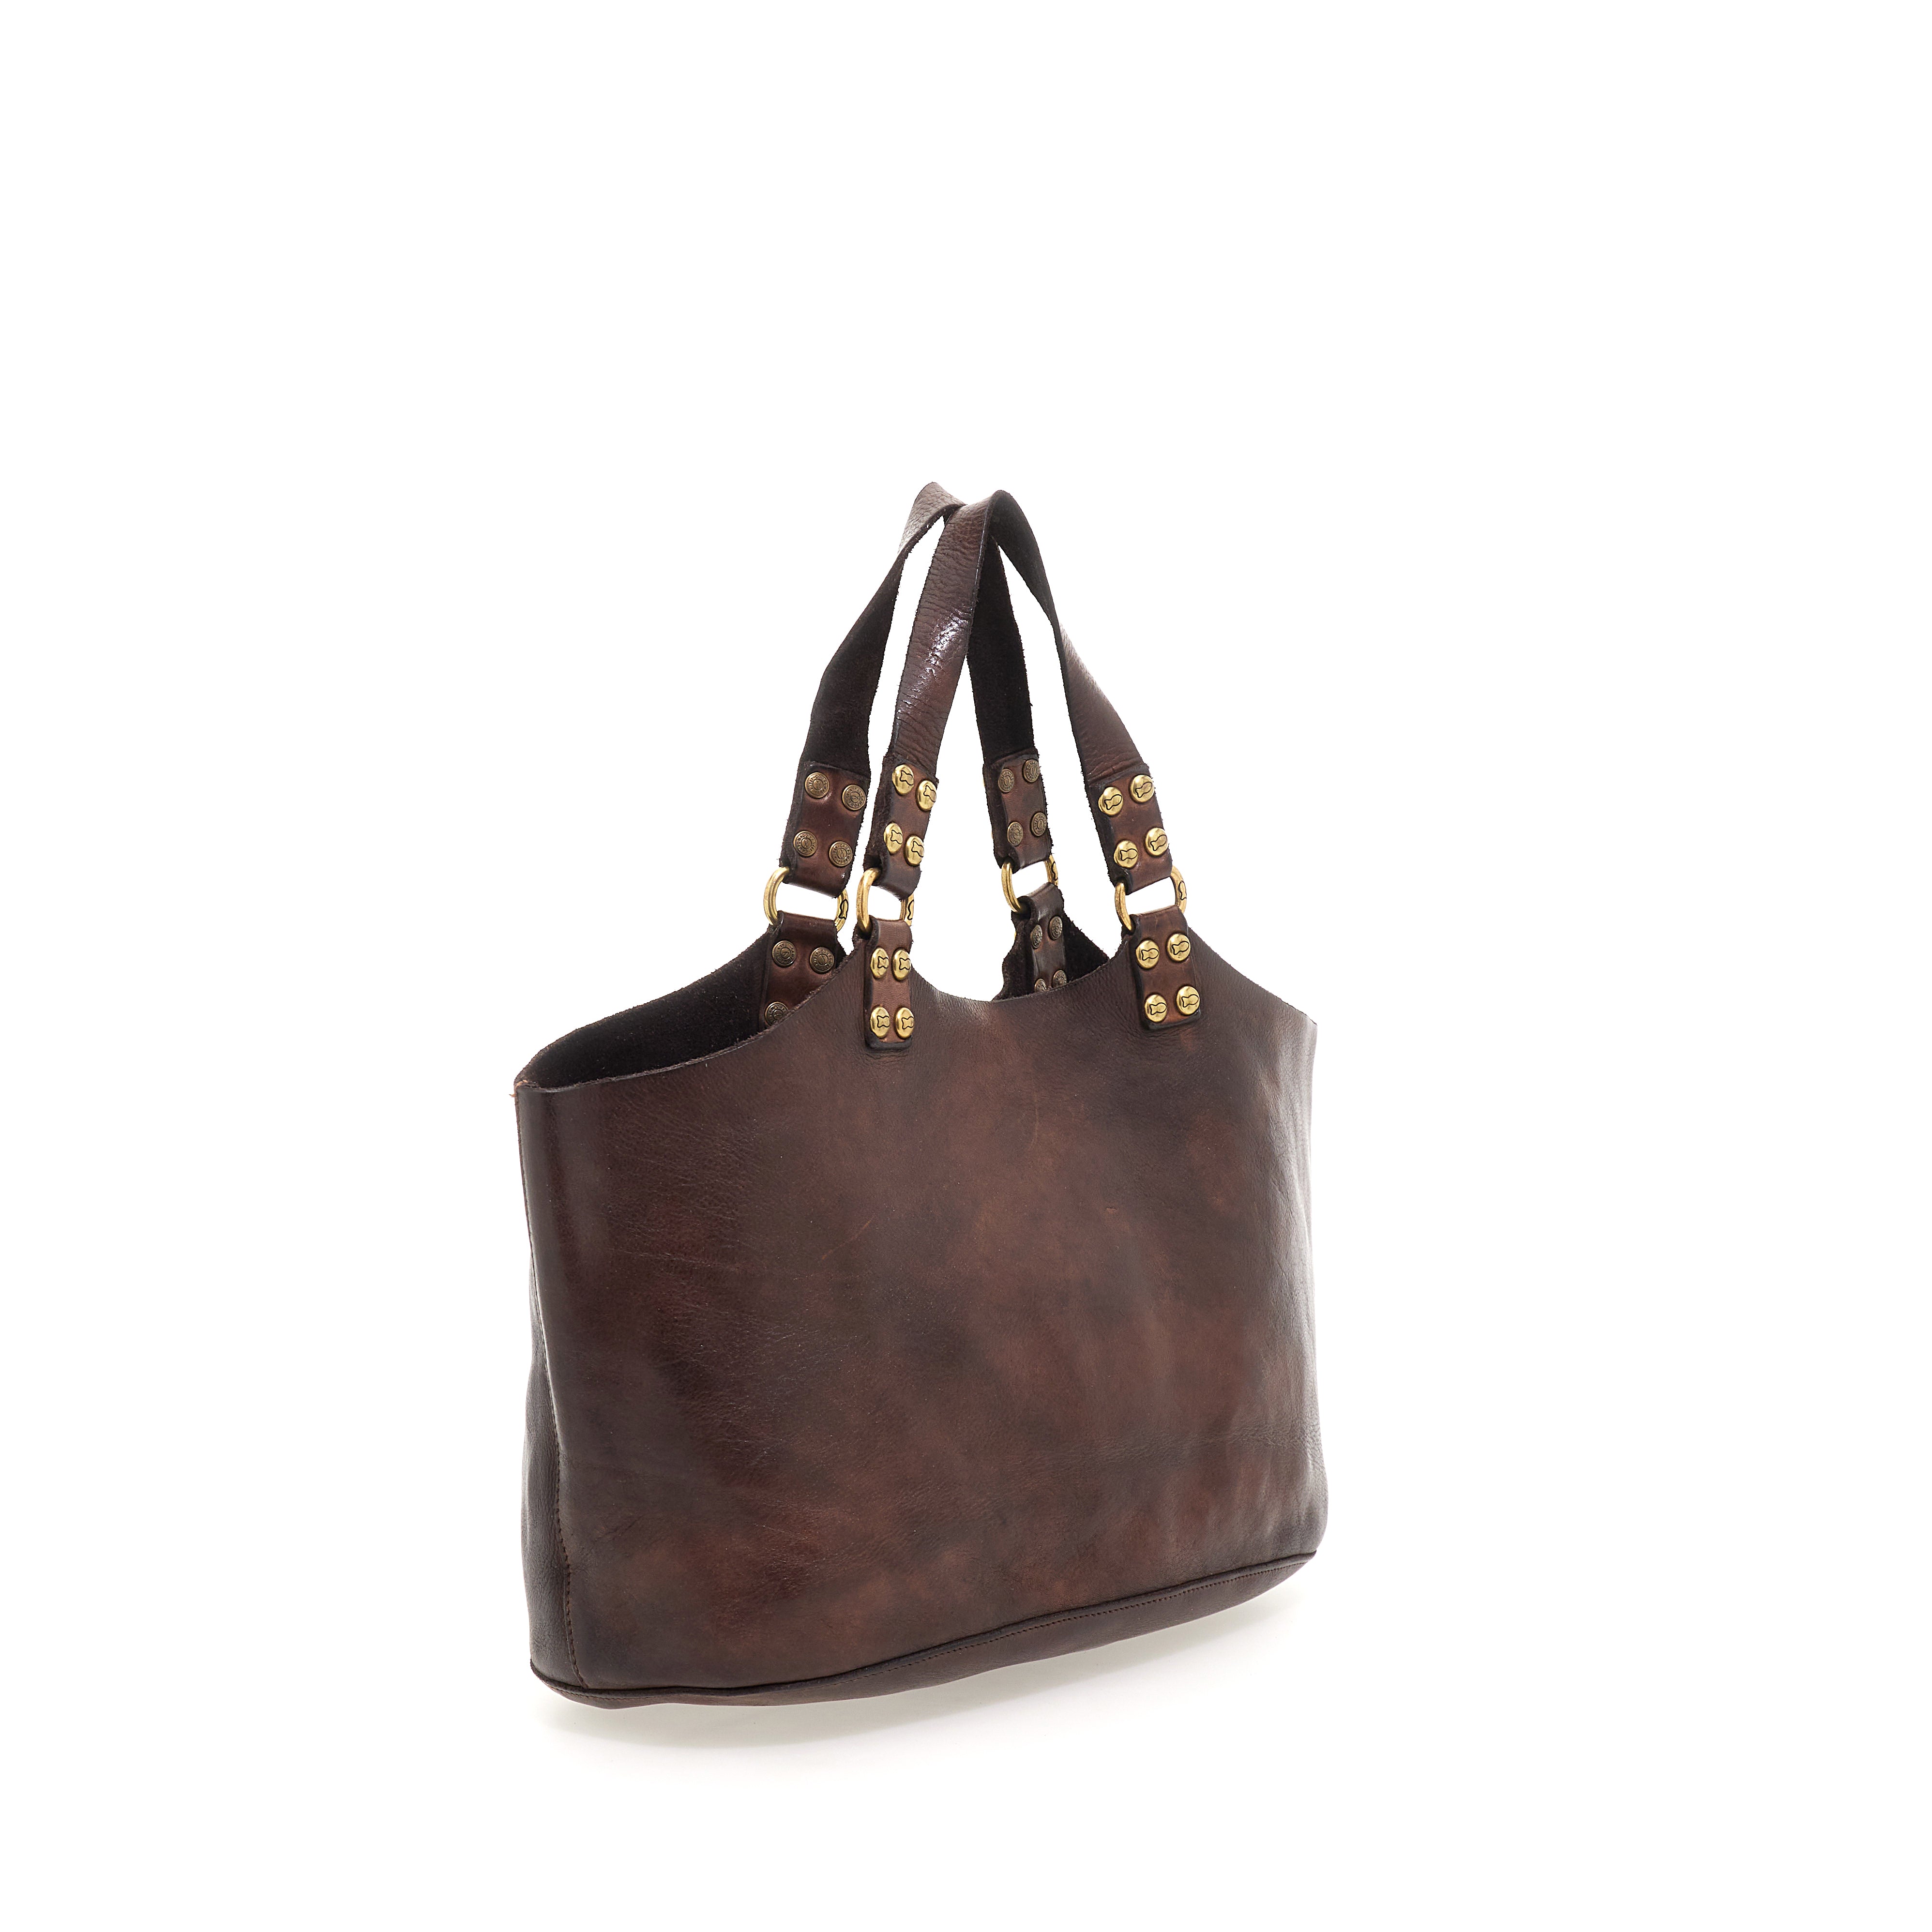 Atena Shopper Tote Bag - Dark Brown